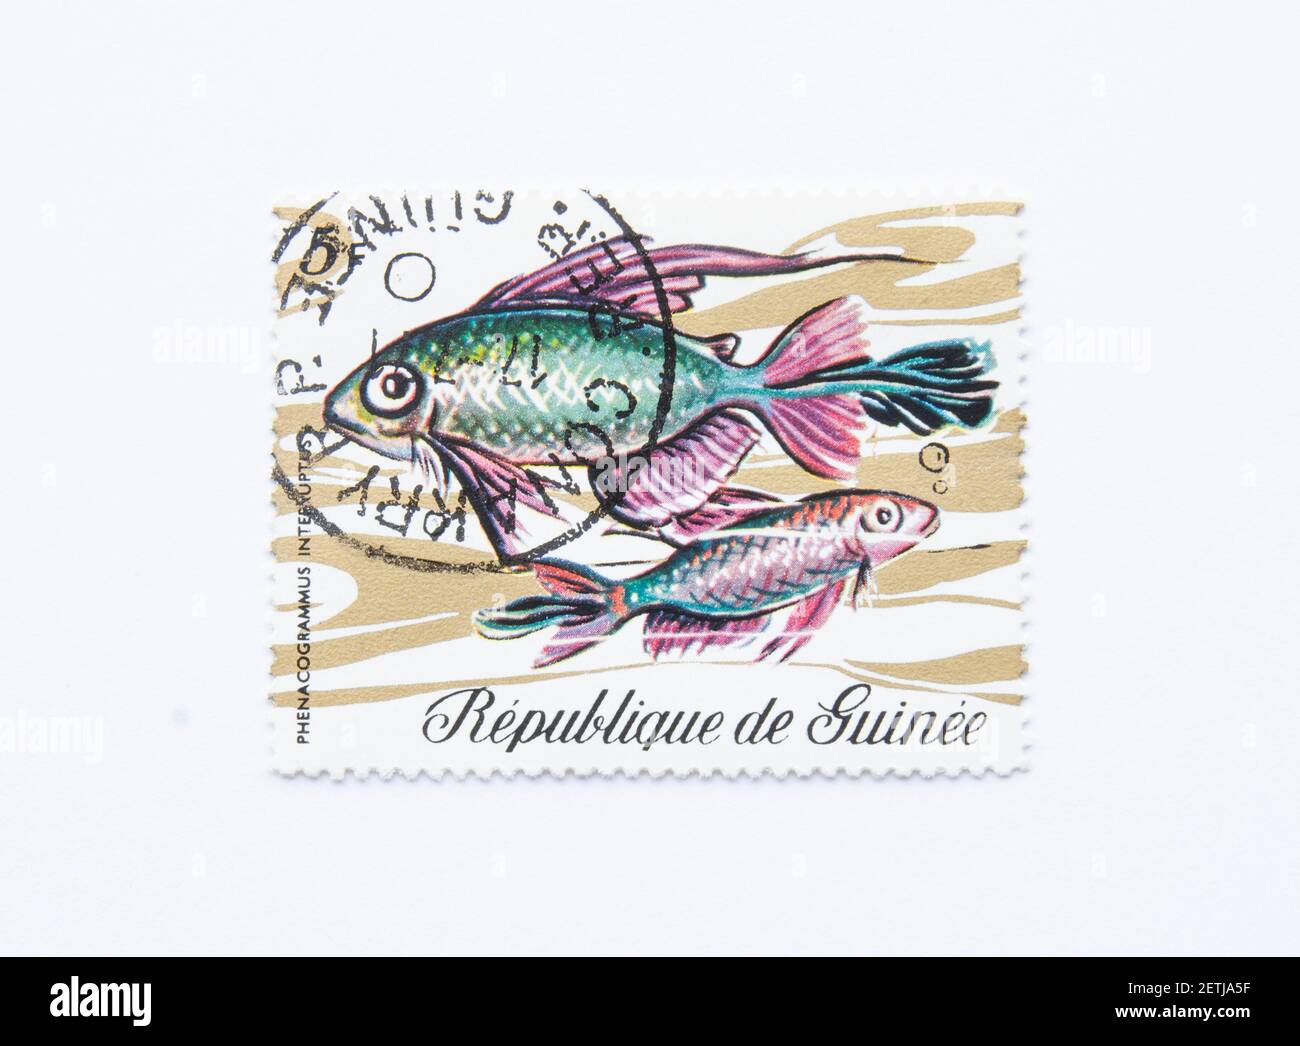 01.03.2021 Istanbul Turkey. Guinea Republic Postage Stamp. circa 1971. phenacogrammus interruptus. Kongo tetra Stock Photo